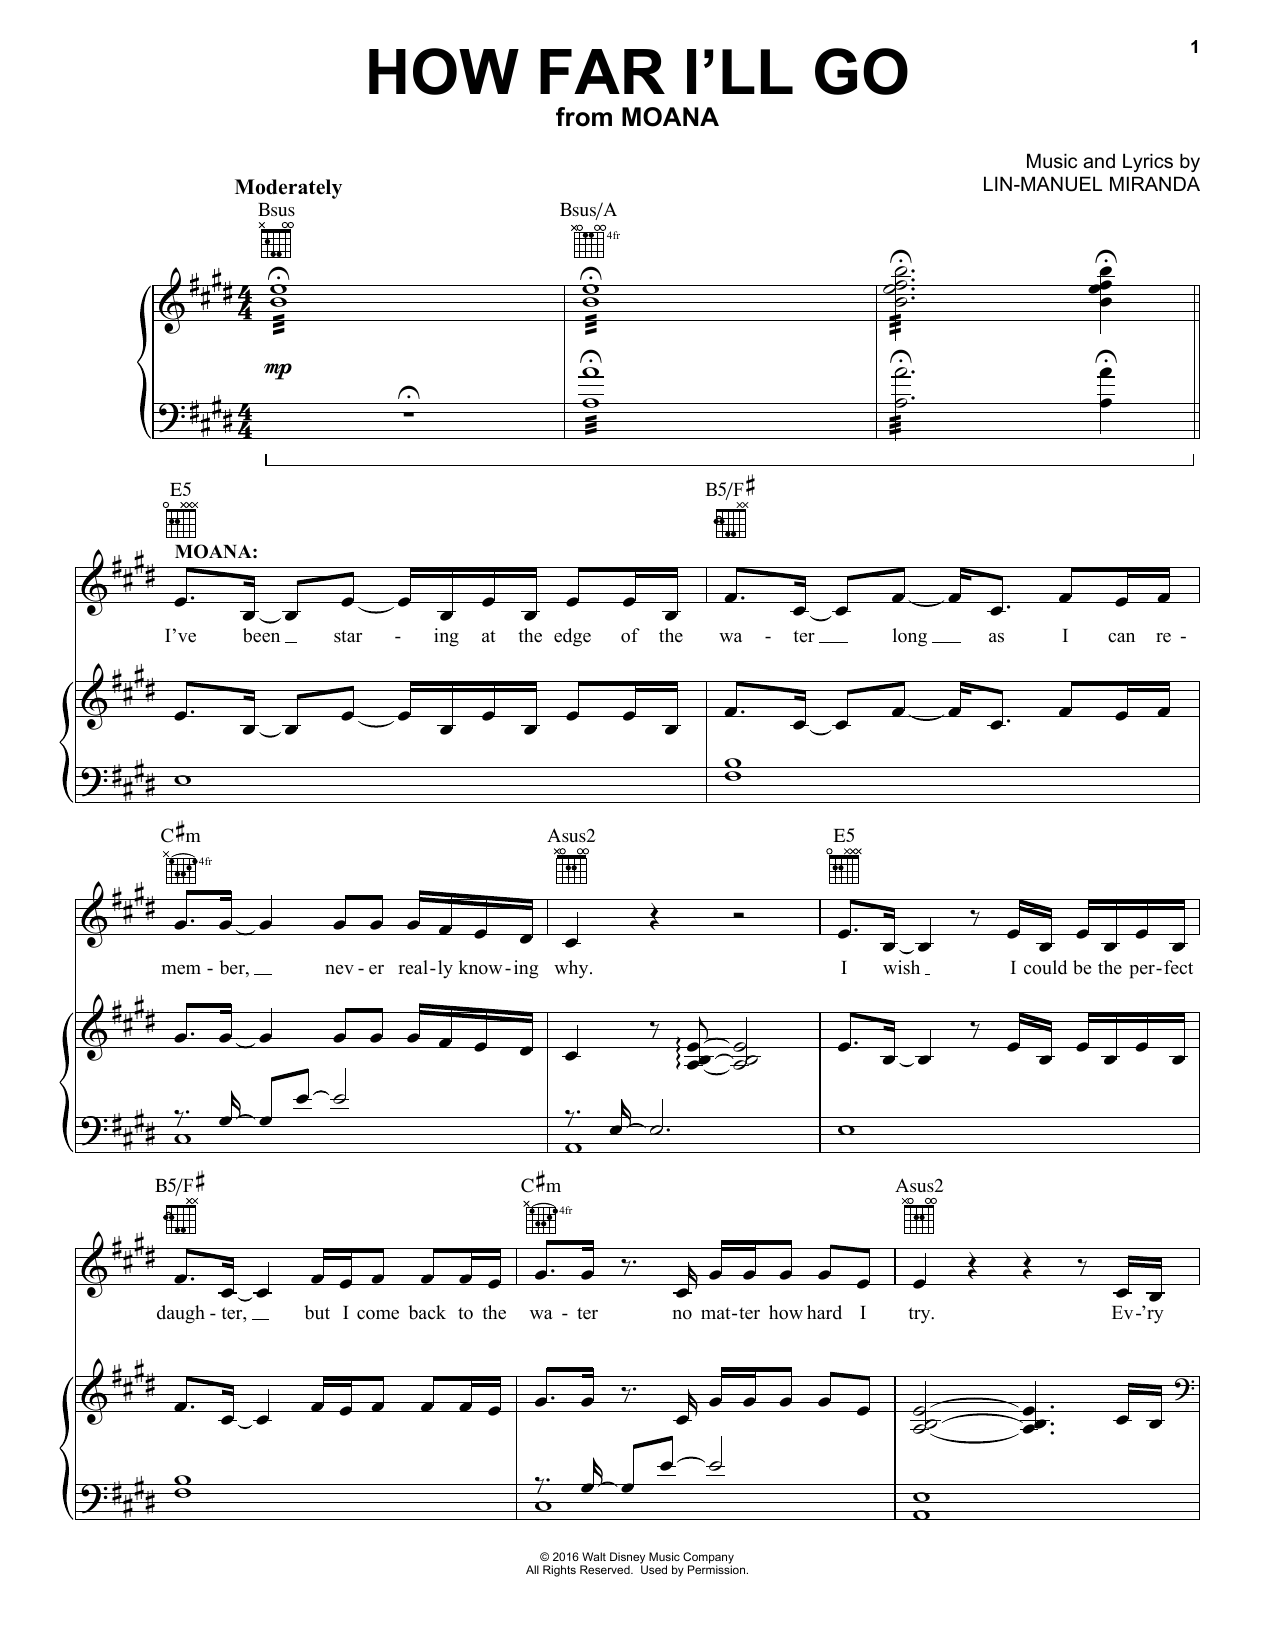 Lin-Manuel Miranda How Far I'll Go (from Moana) sheet music notes and chords arranged for Lead Sheet / Fake Book